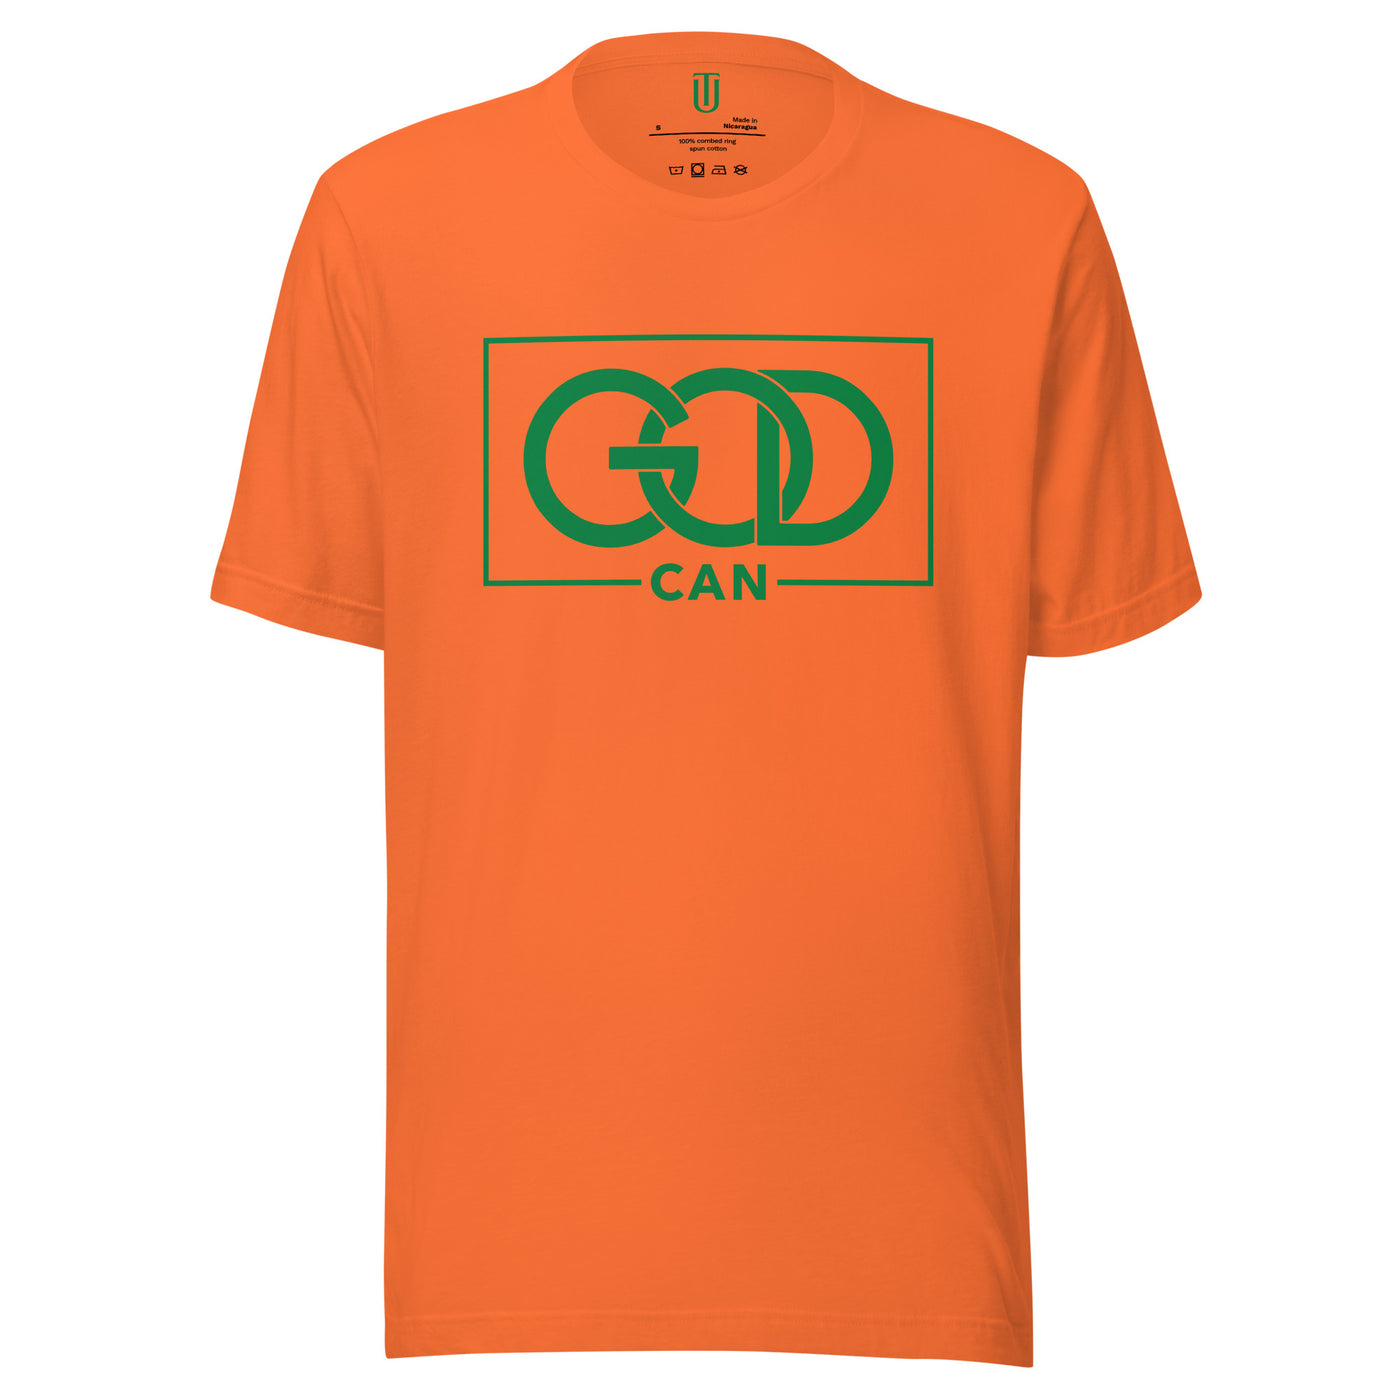 God Can Pink cotton unisex T-shirt. "GOD CAN" Green design on orange t-shirt.